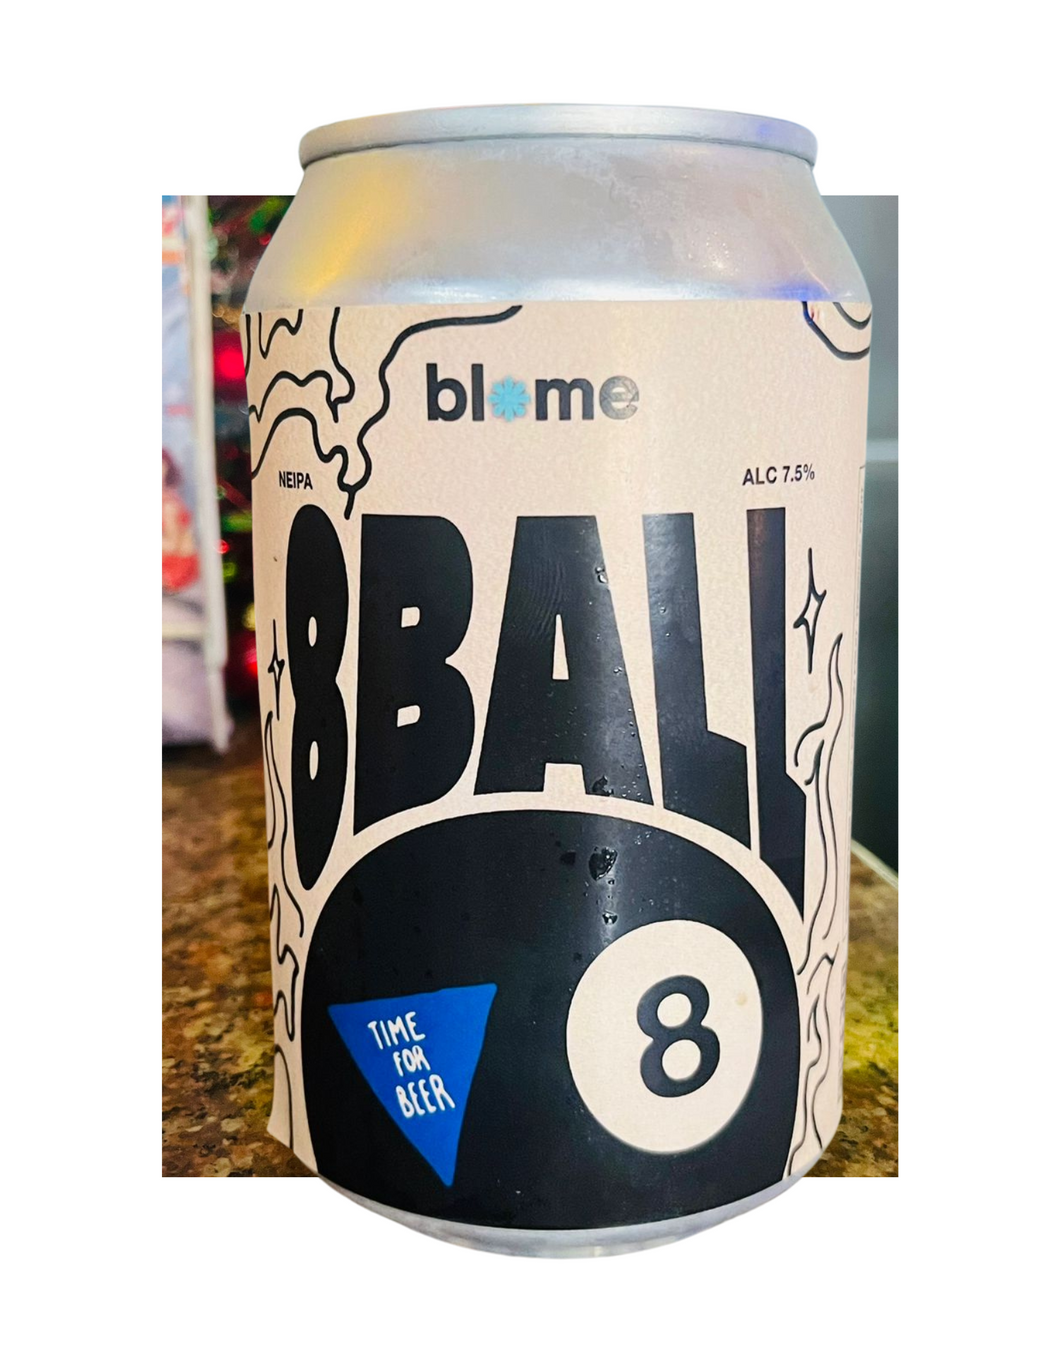 Blame 8-Ball IPA